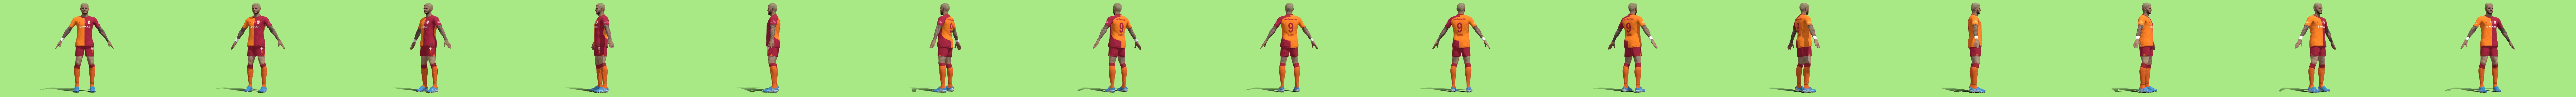 T-Pose Mauro Icardi Galatasaray 23-24 - 3D model by 3dpassion.net  (@3dpassion.net) [21e1713]